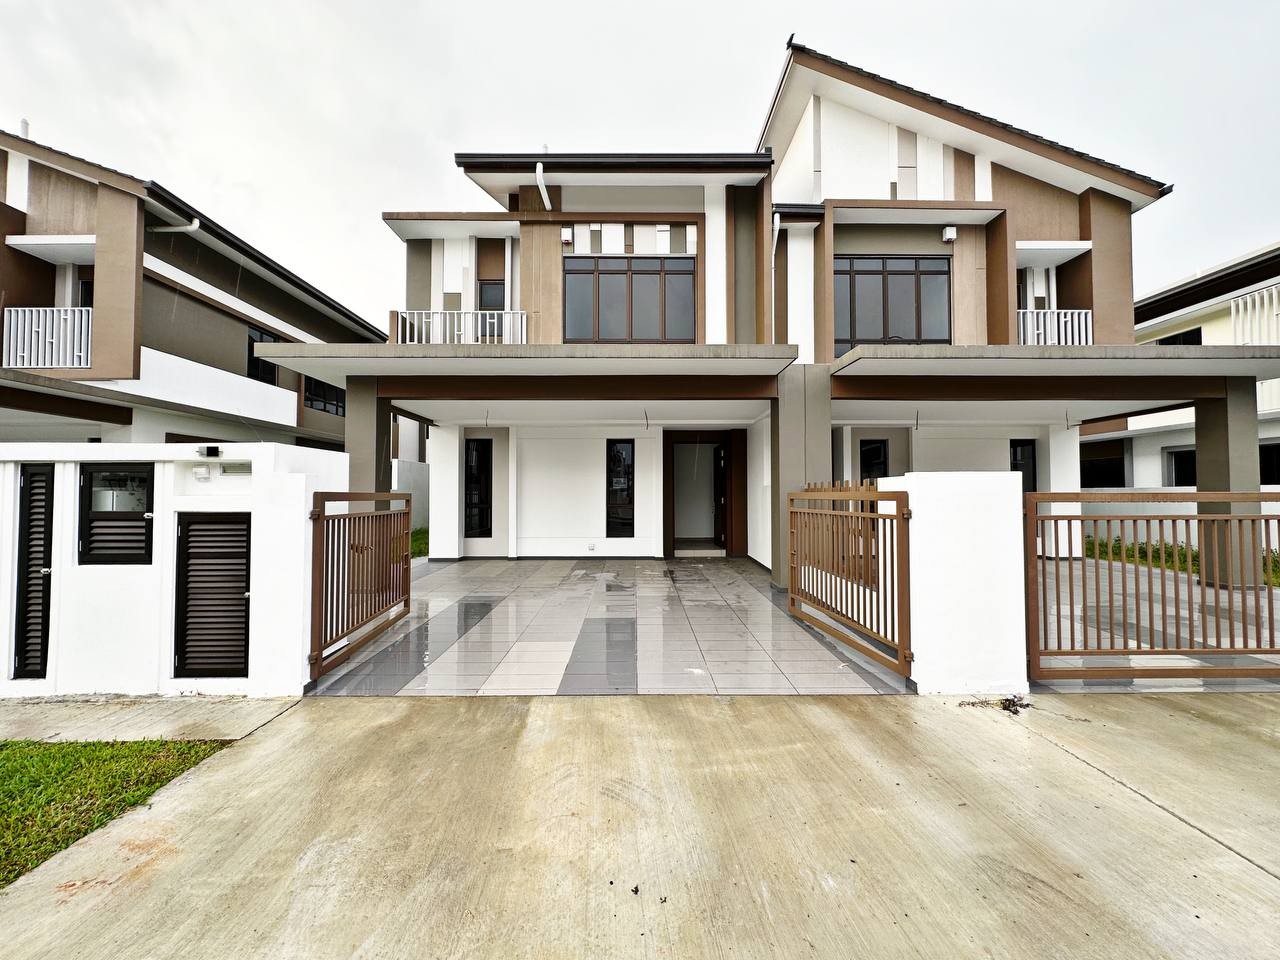 RUMAH BARU 2 Storey Semi-D House Bywater Setia Utama Type F Leegeana Setia Alam Selangor